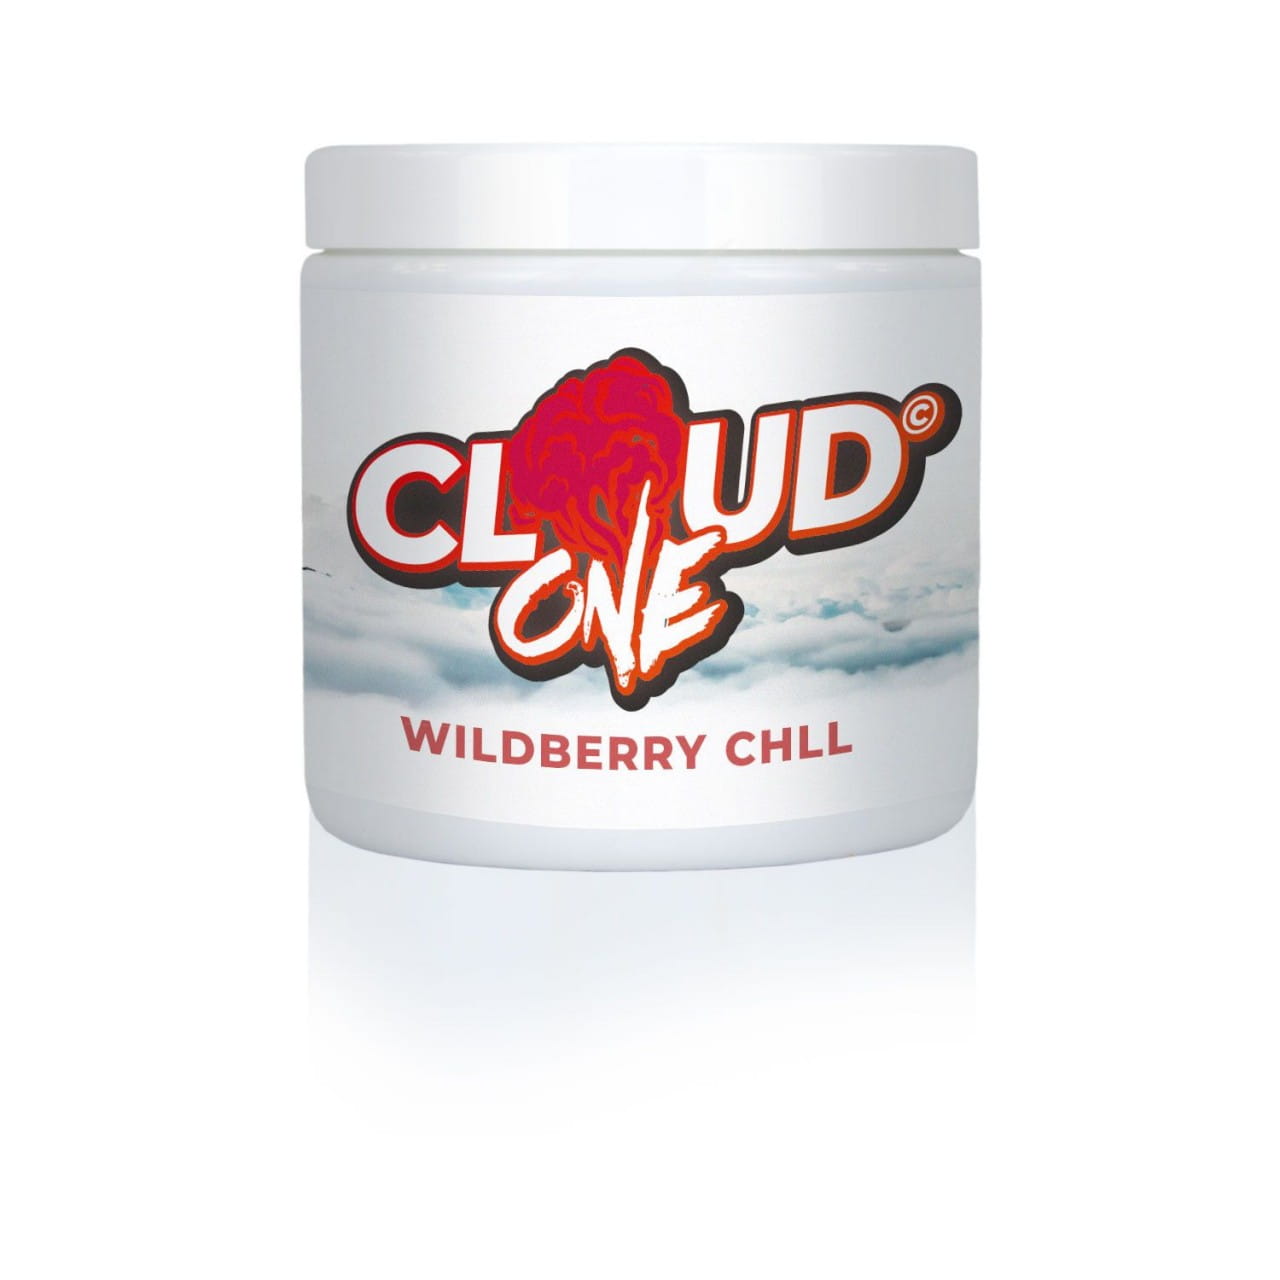 Cloud One - Wildberry Chill 200 g unter ohne Kategorie